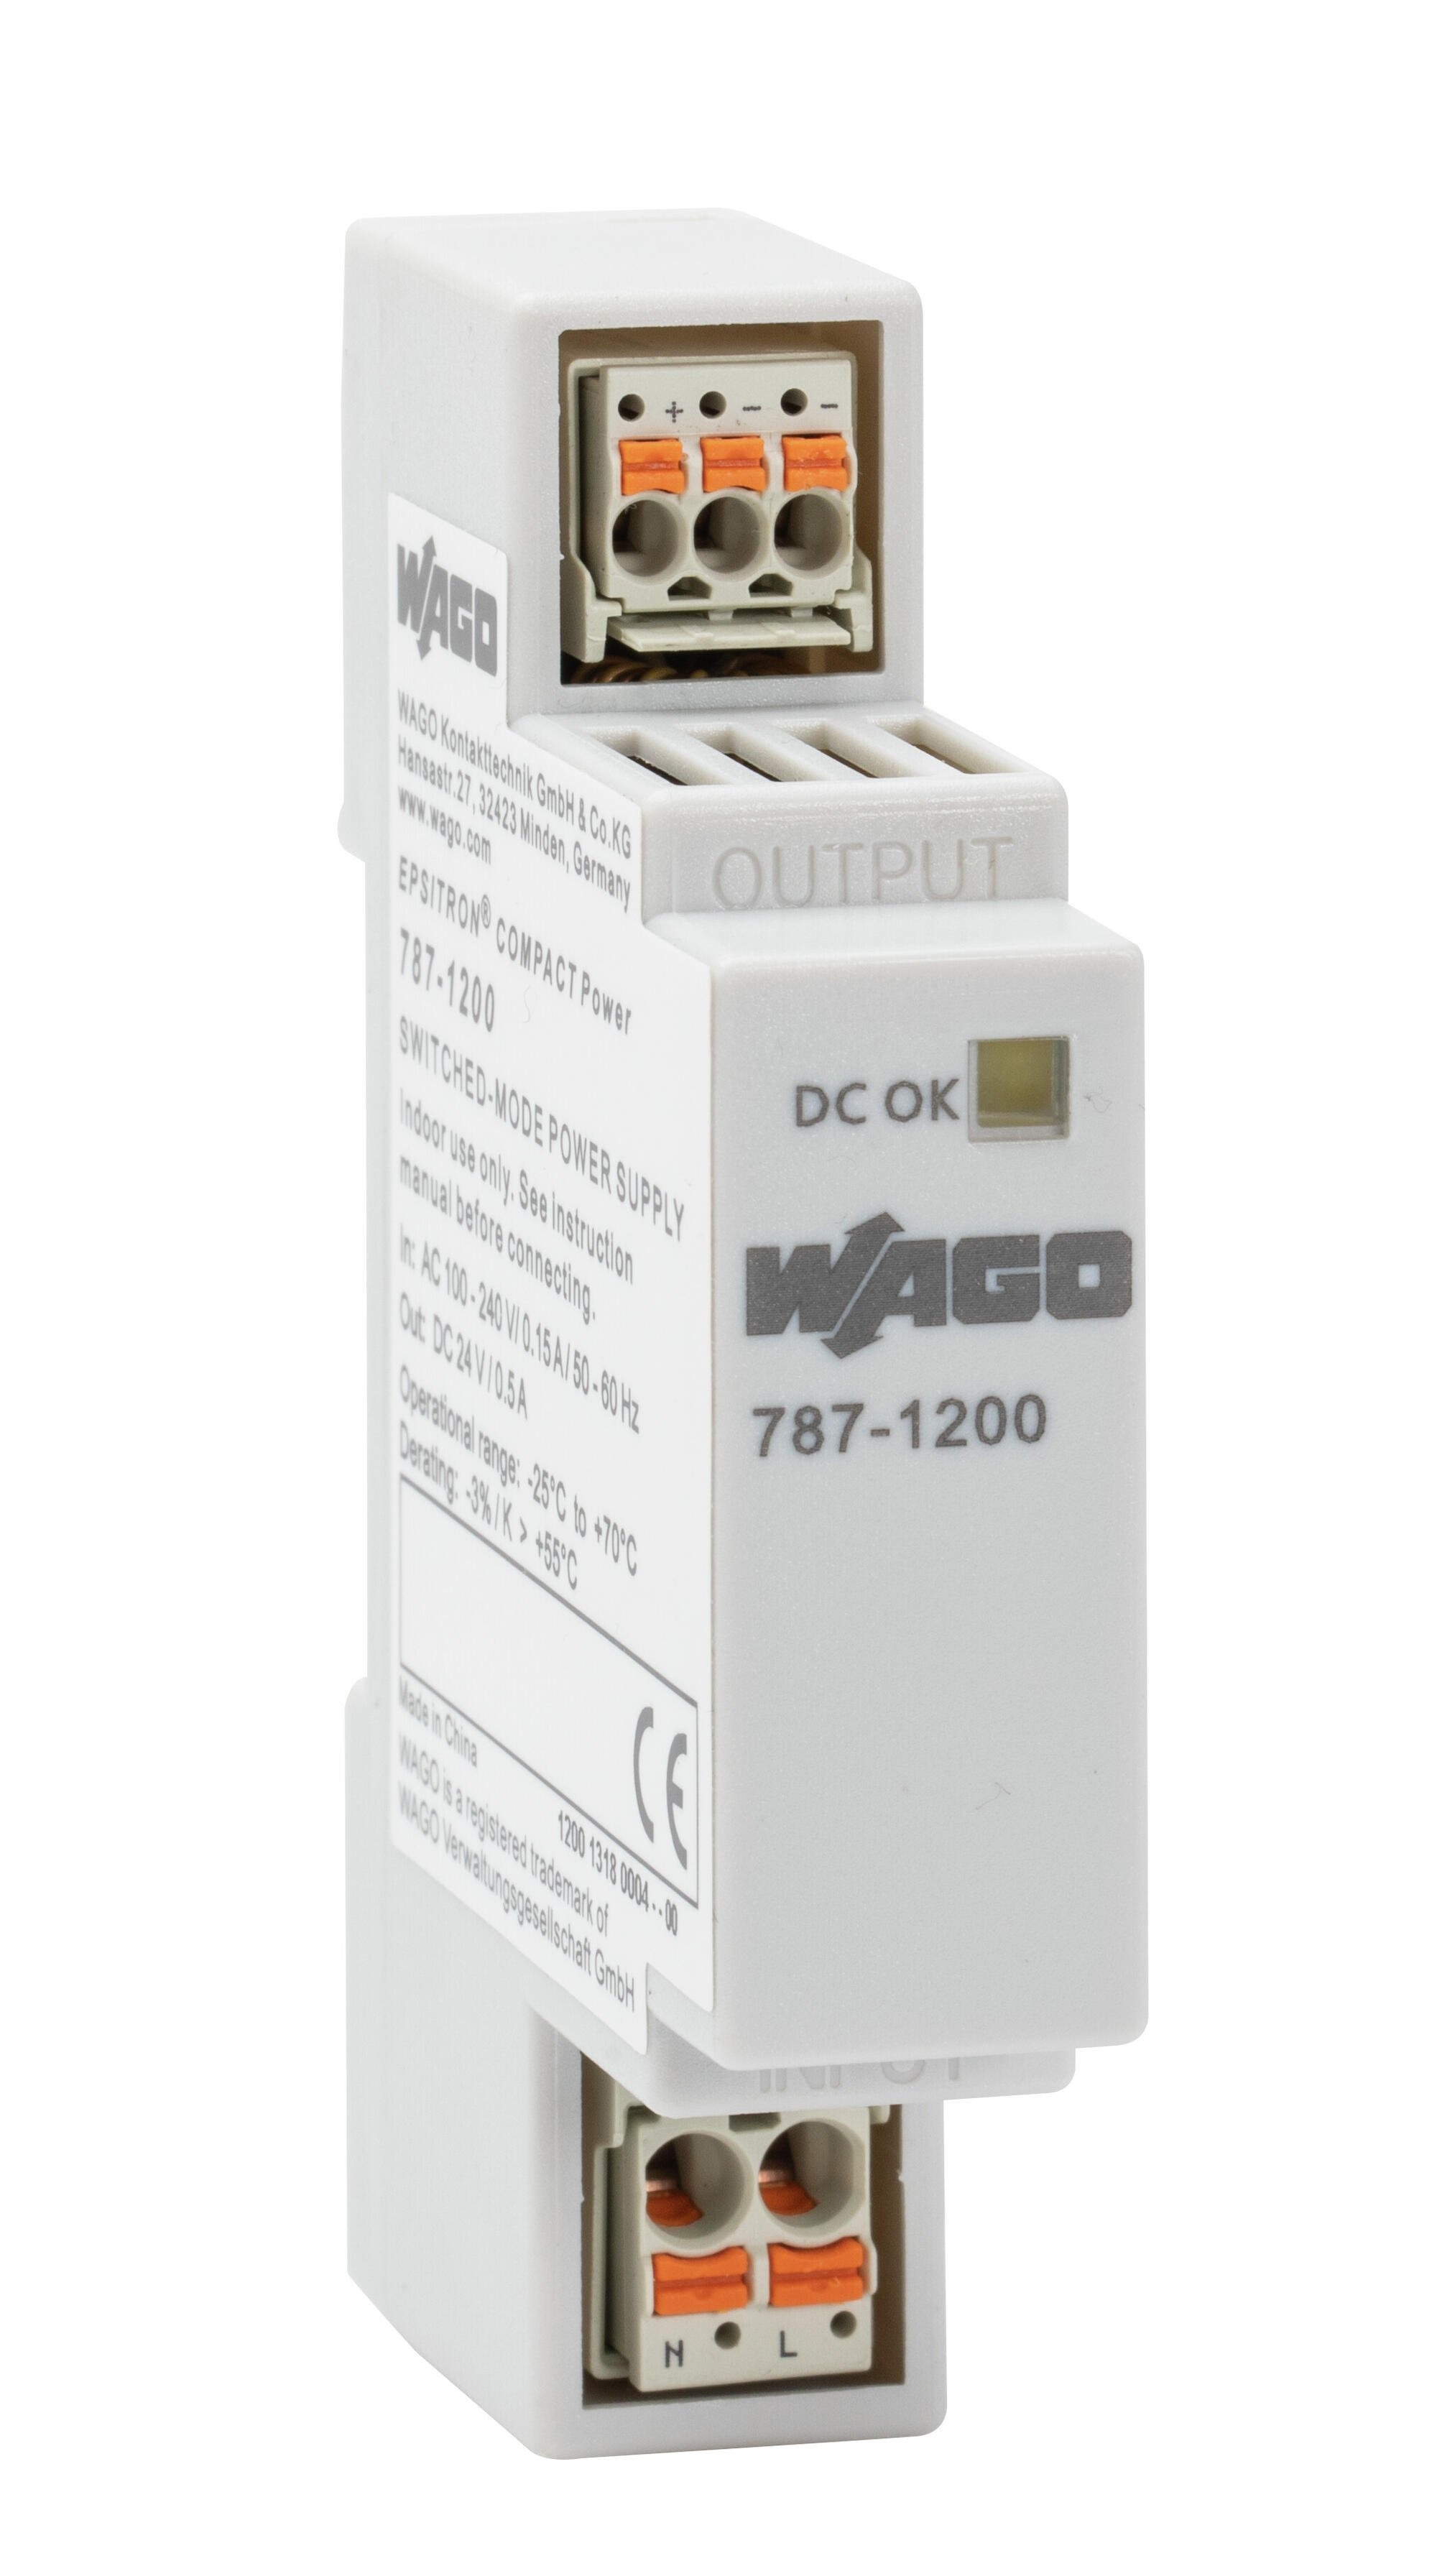 WAGO SMPSU; Compact; 24VDC Output; 0.5A; DC-OK LED